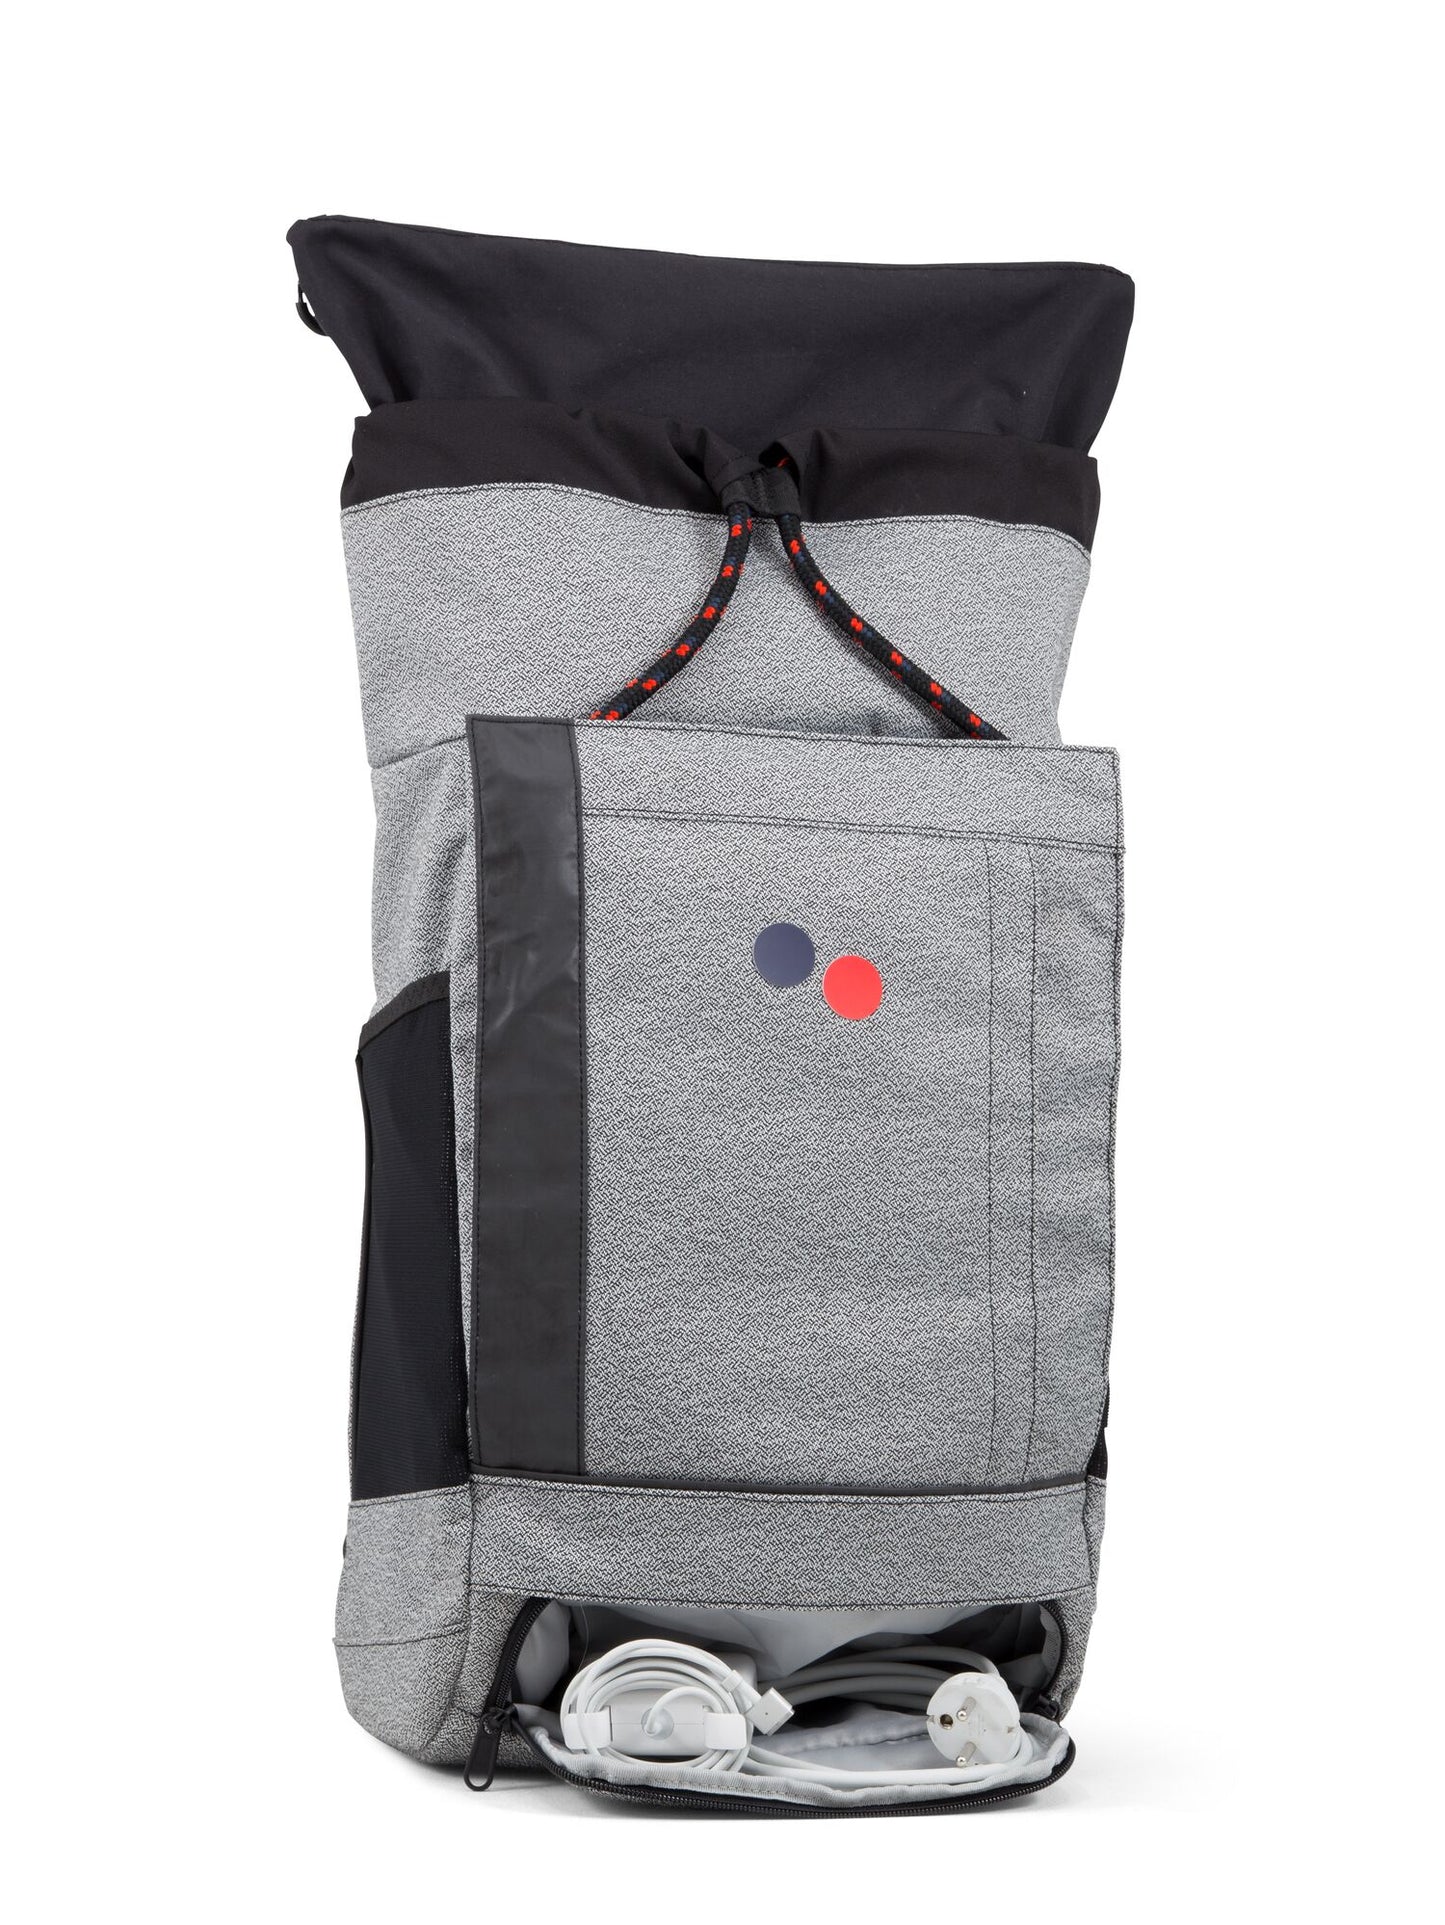 pinqponq-backpack-Blok-Medium-Vivid-Monochrome-detail-front